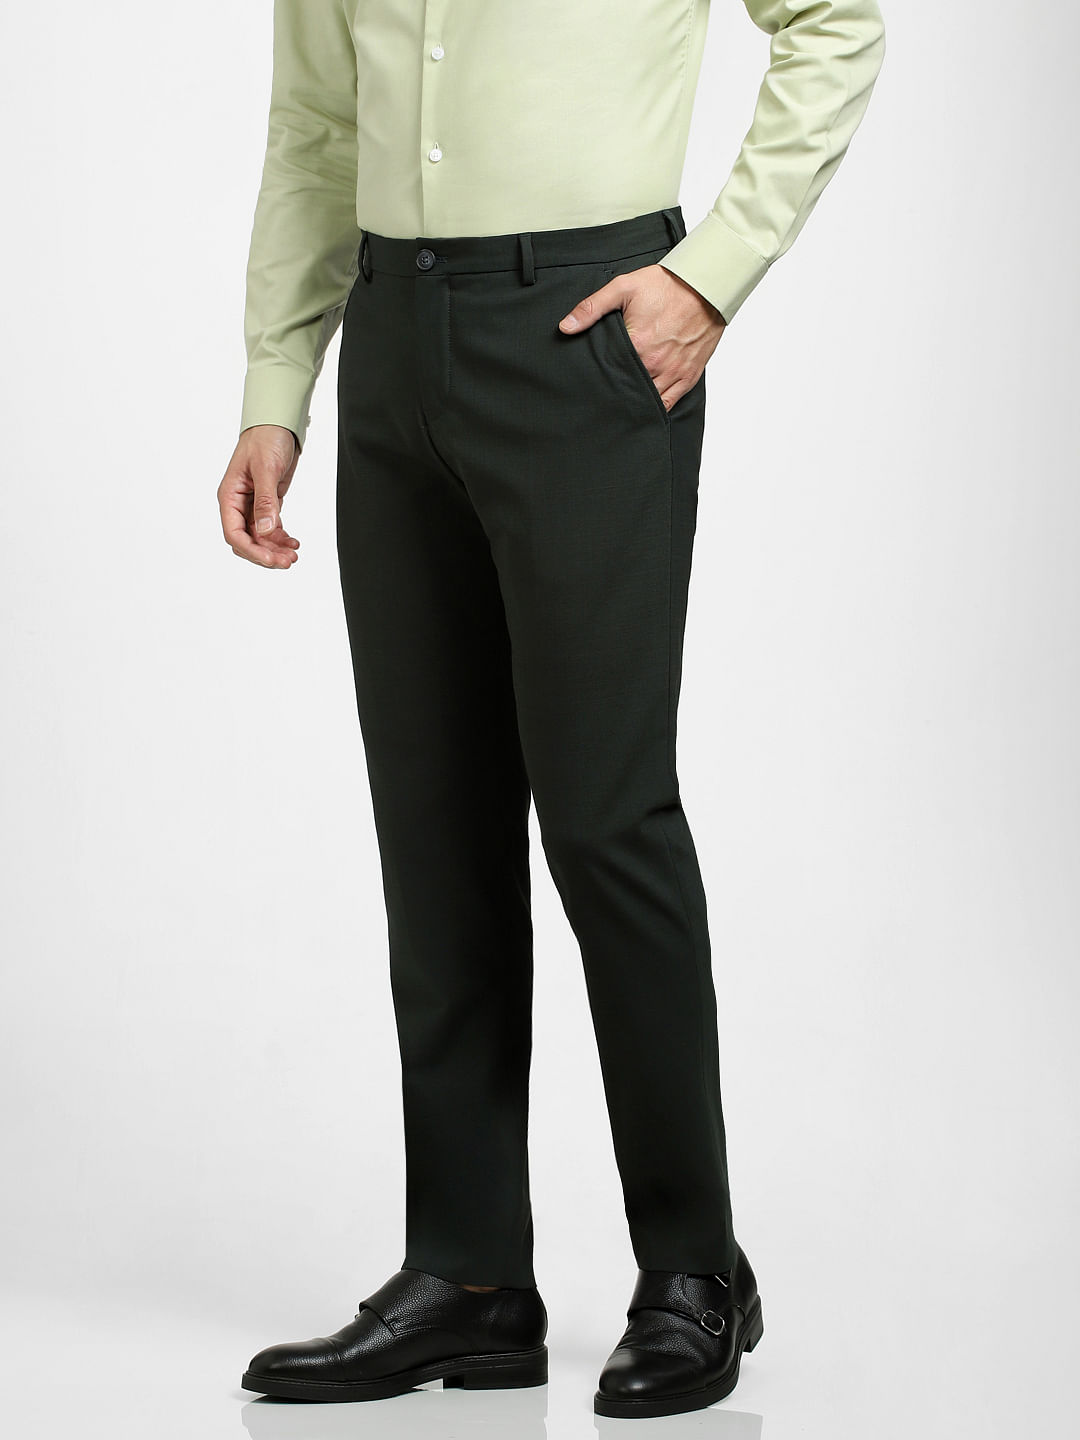 Formal pants | Raj cloth center